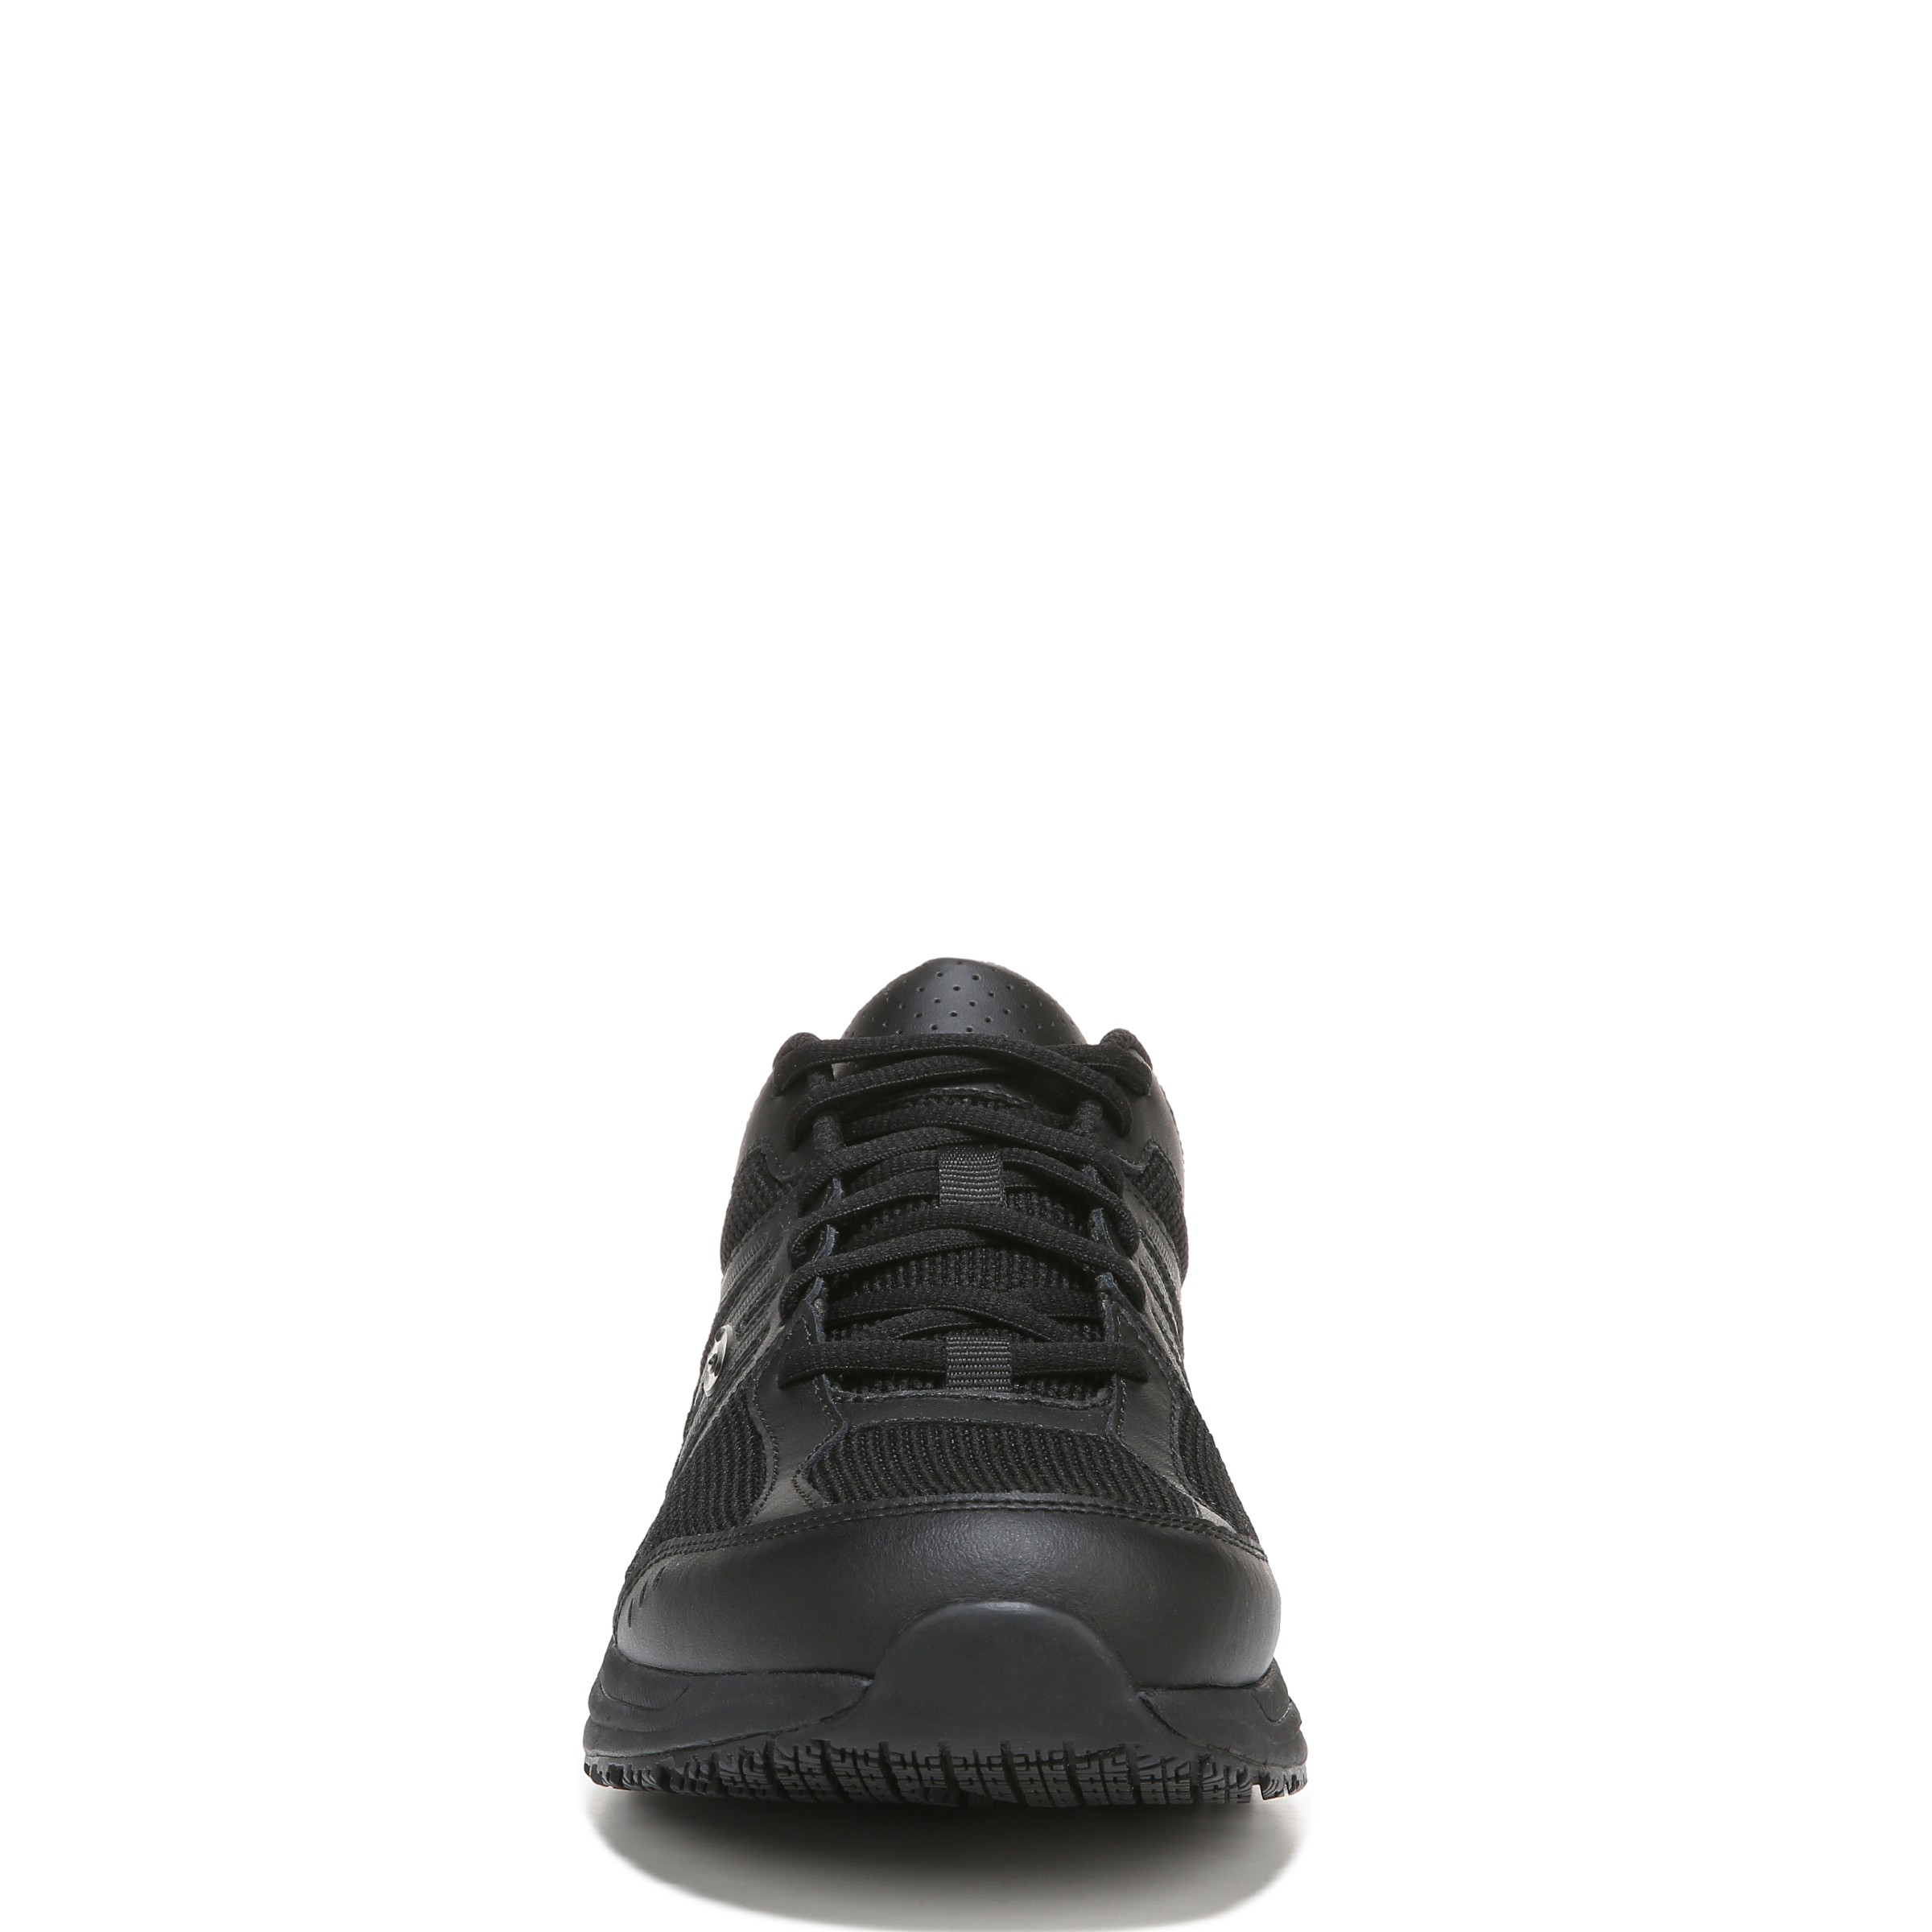 Monster Slip Resistant Sneaker in Black Leather | Work | Dr 